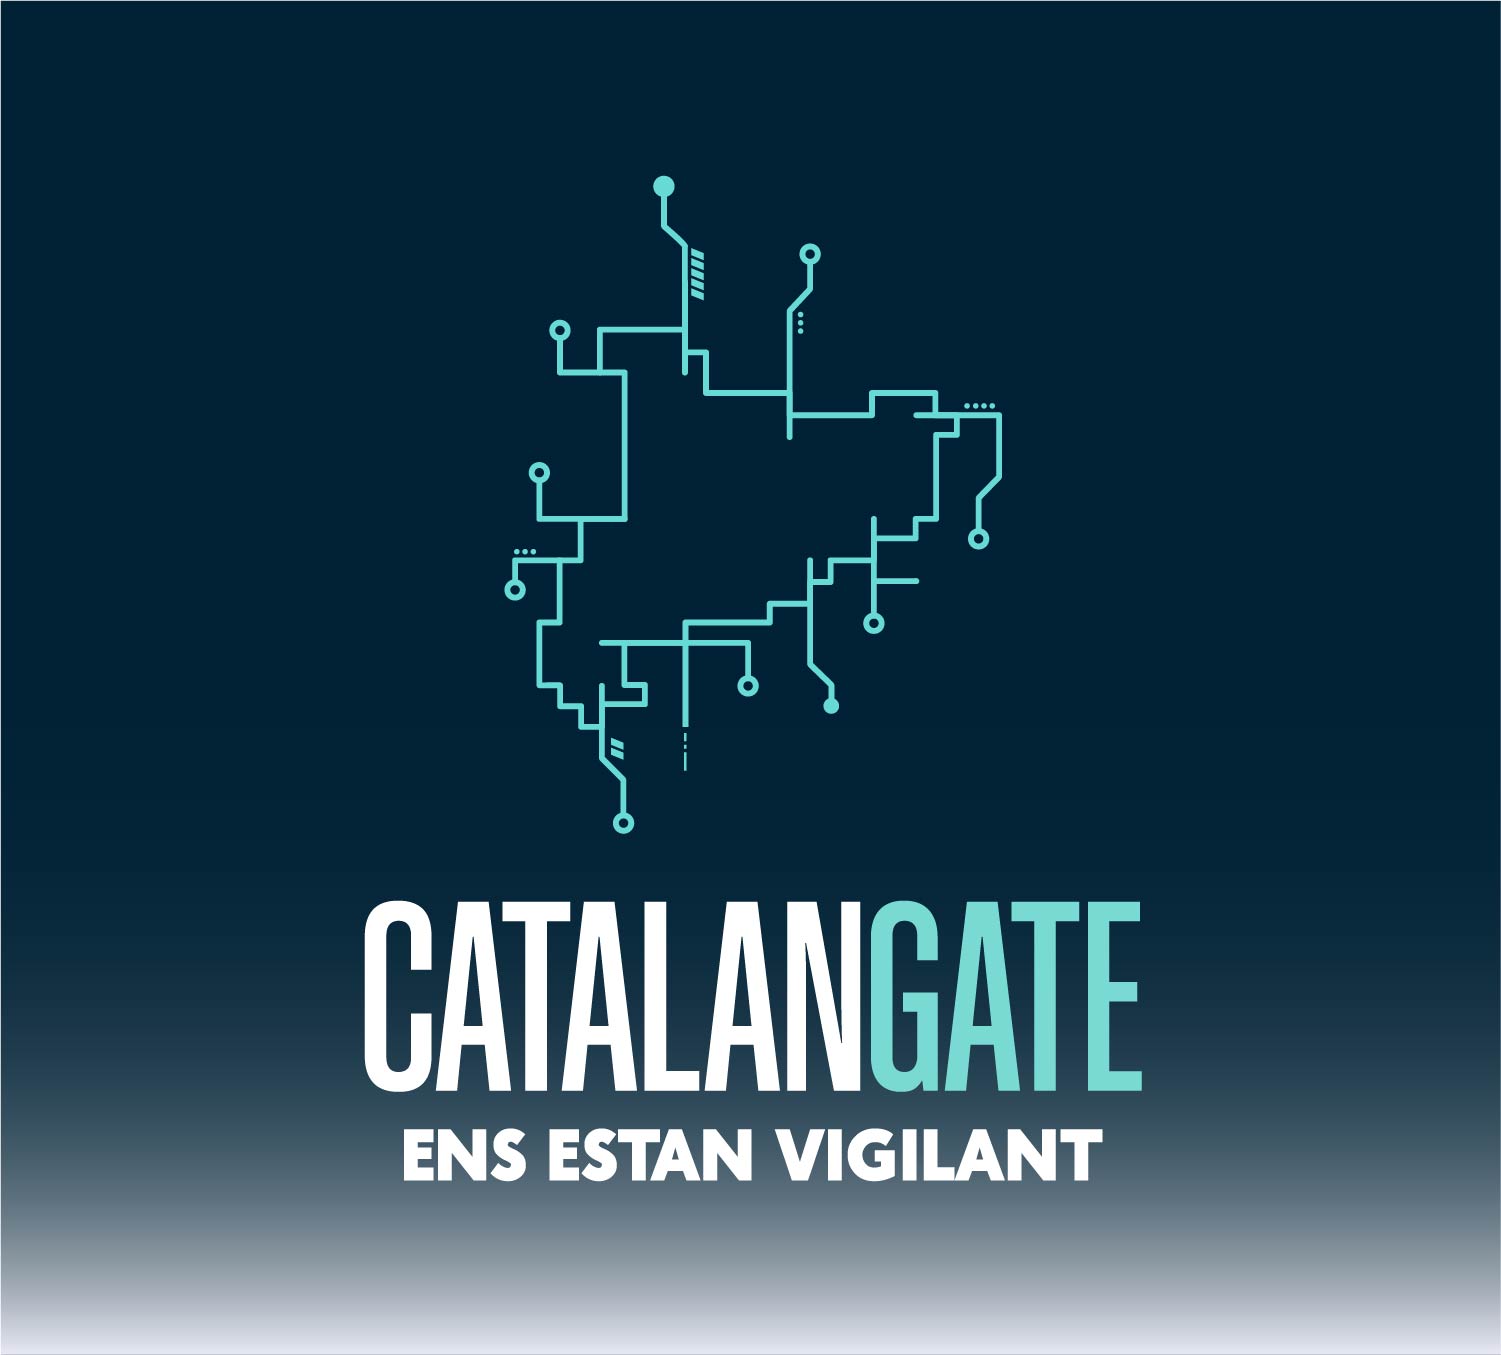 CatalanGate